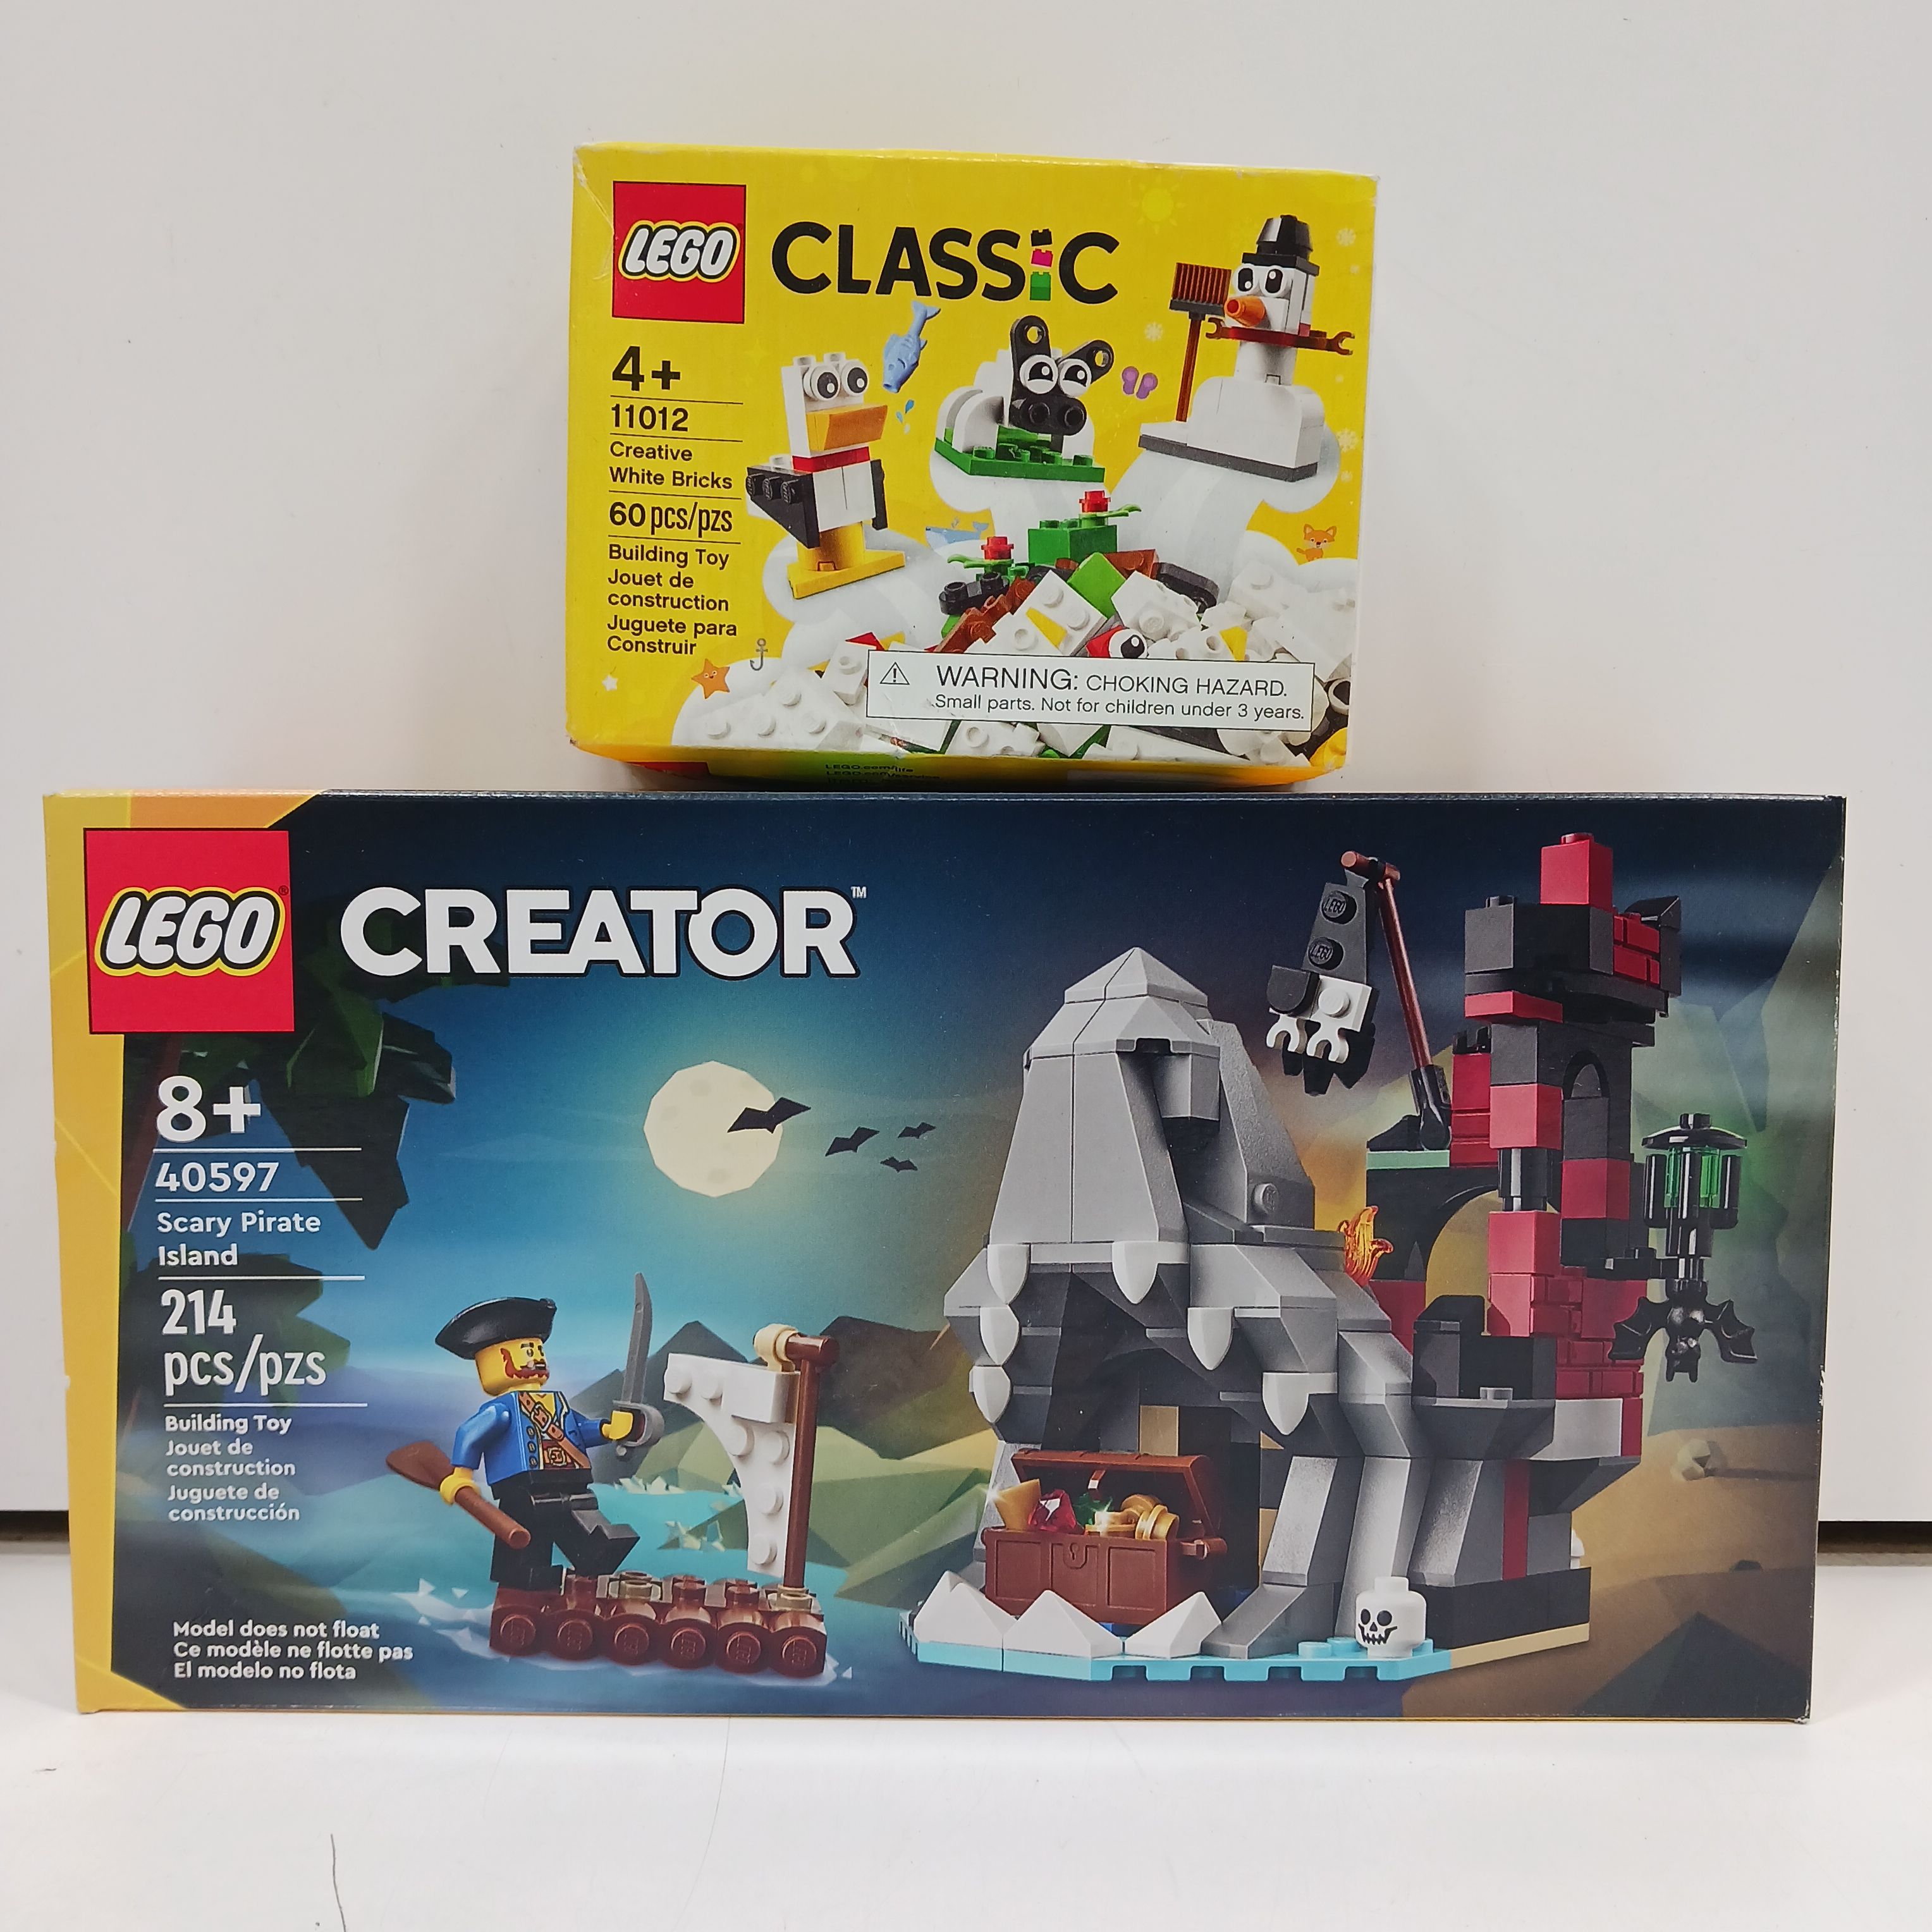 Lego Classic - Briques créatives blanches - 11012